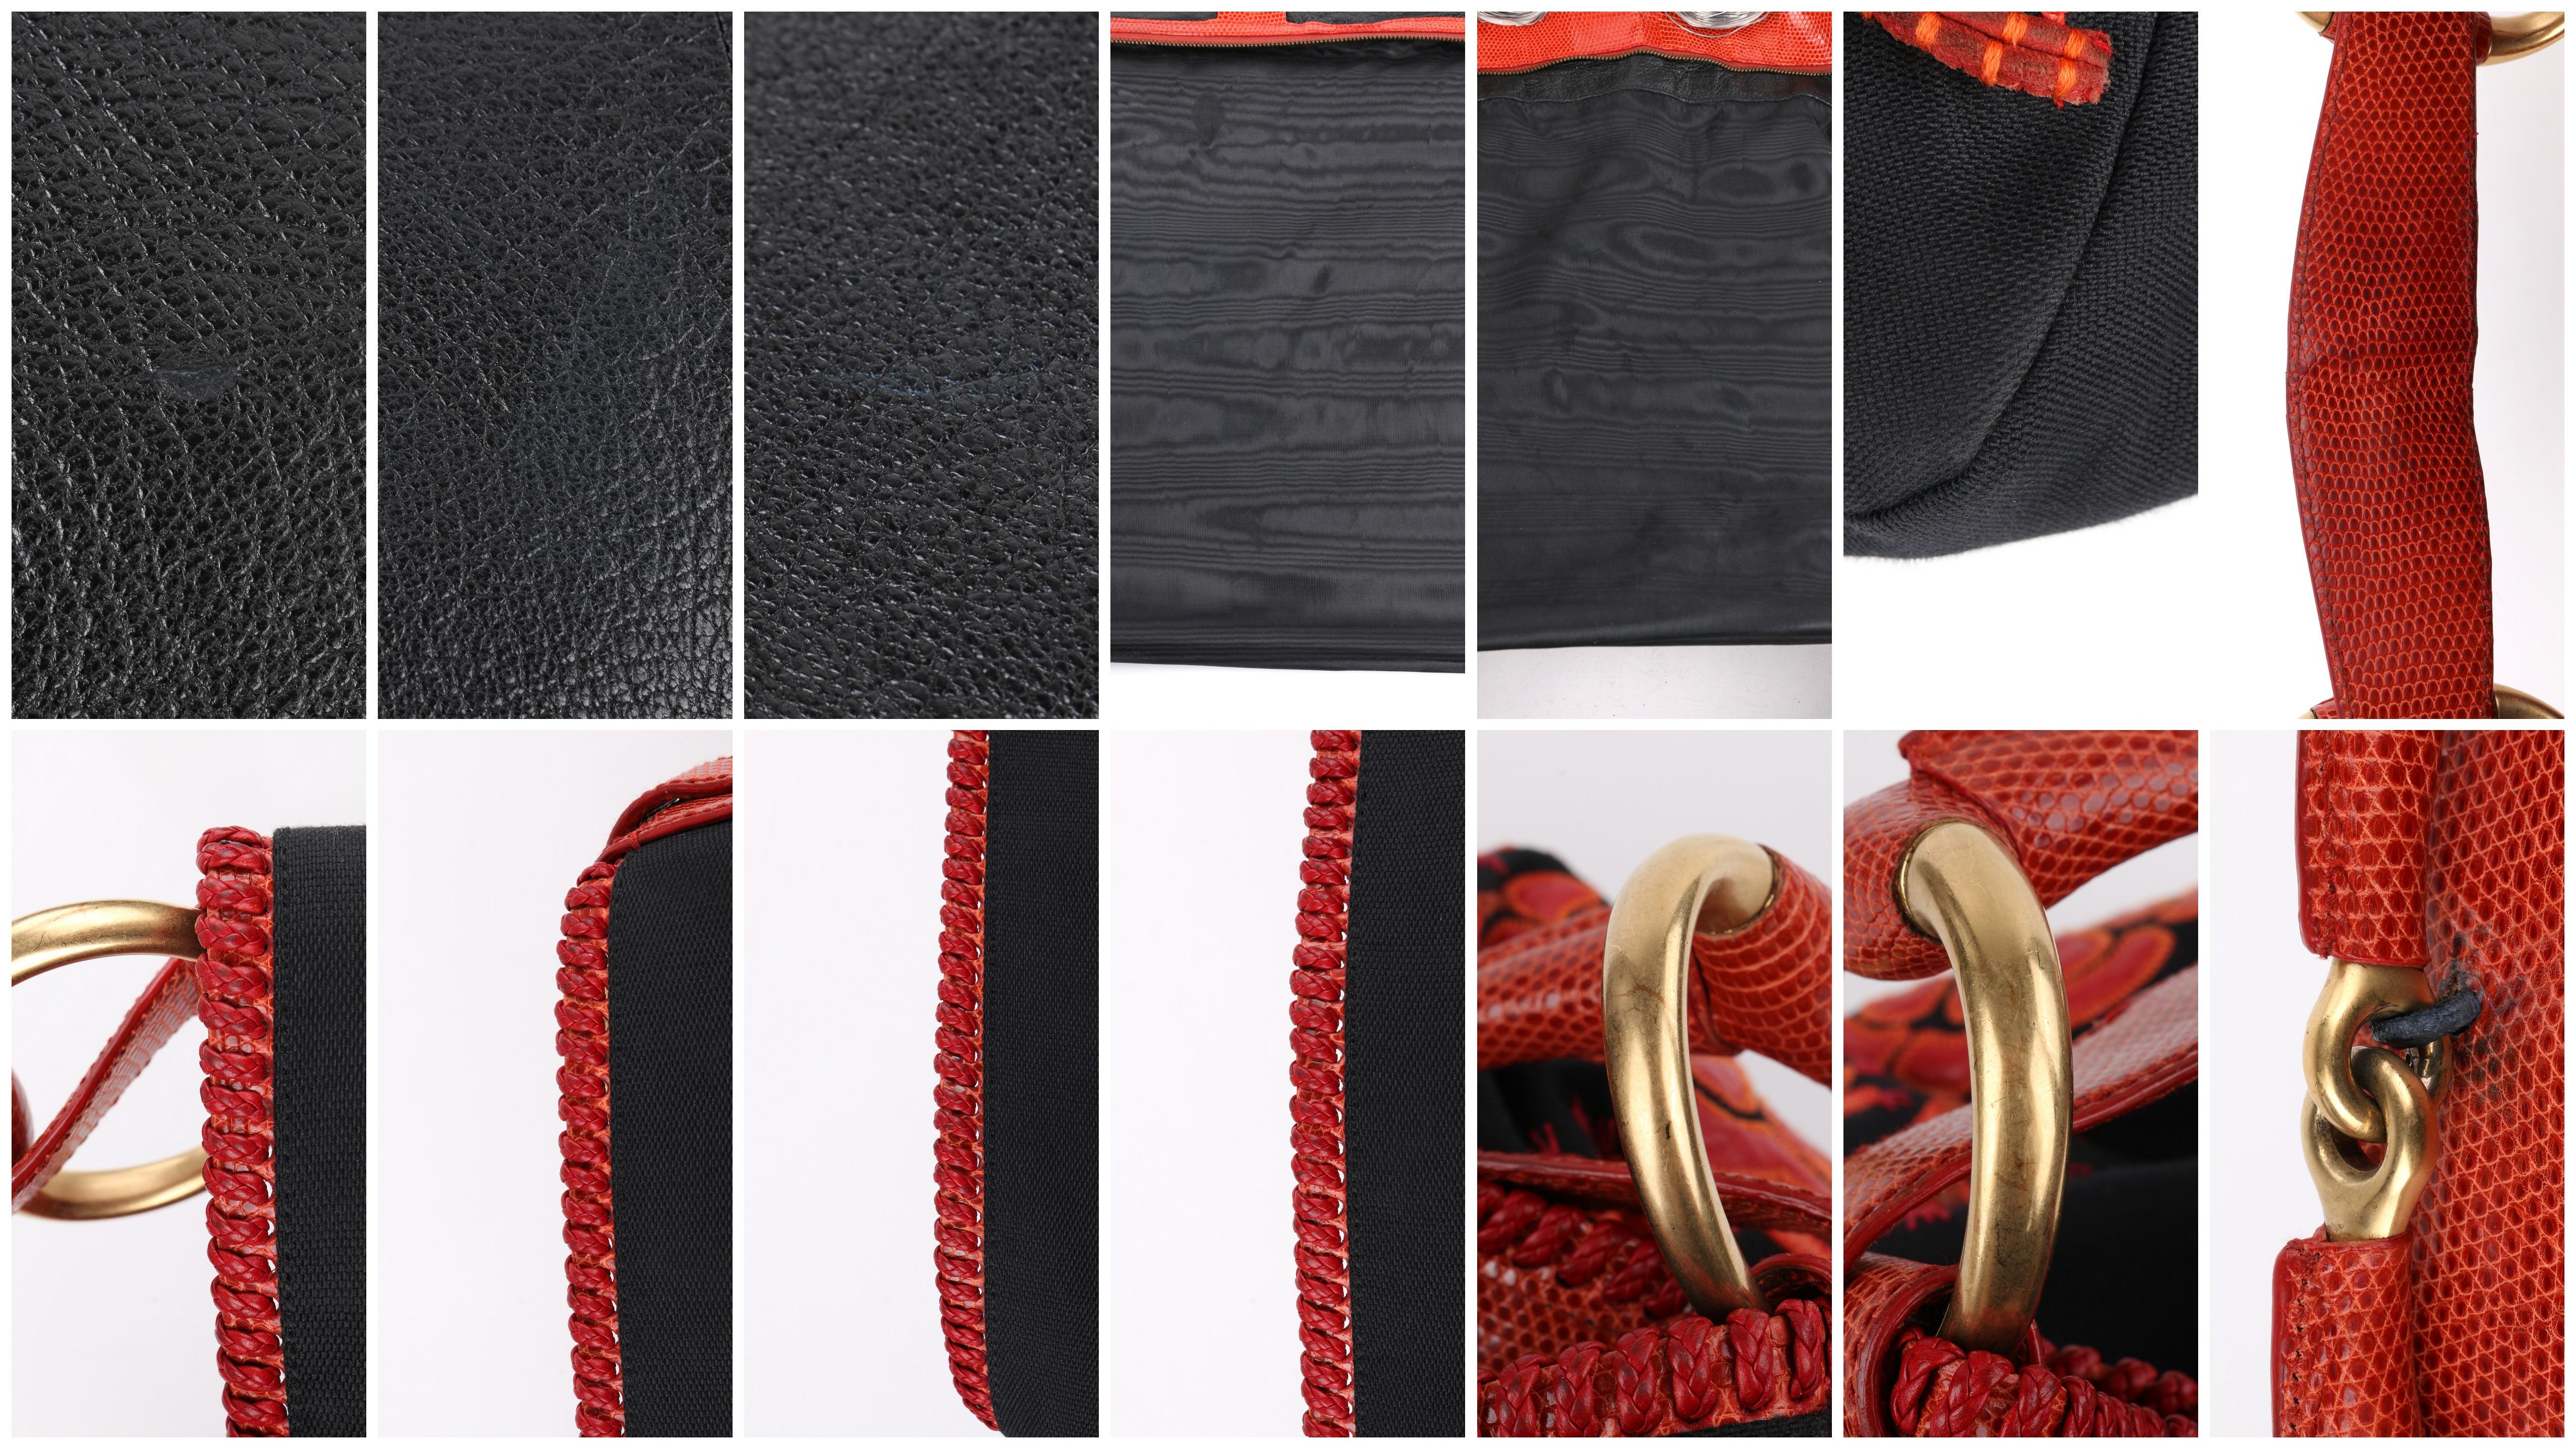 GUCCI Black Canvas & Red Lizard Leather Floral Applique 